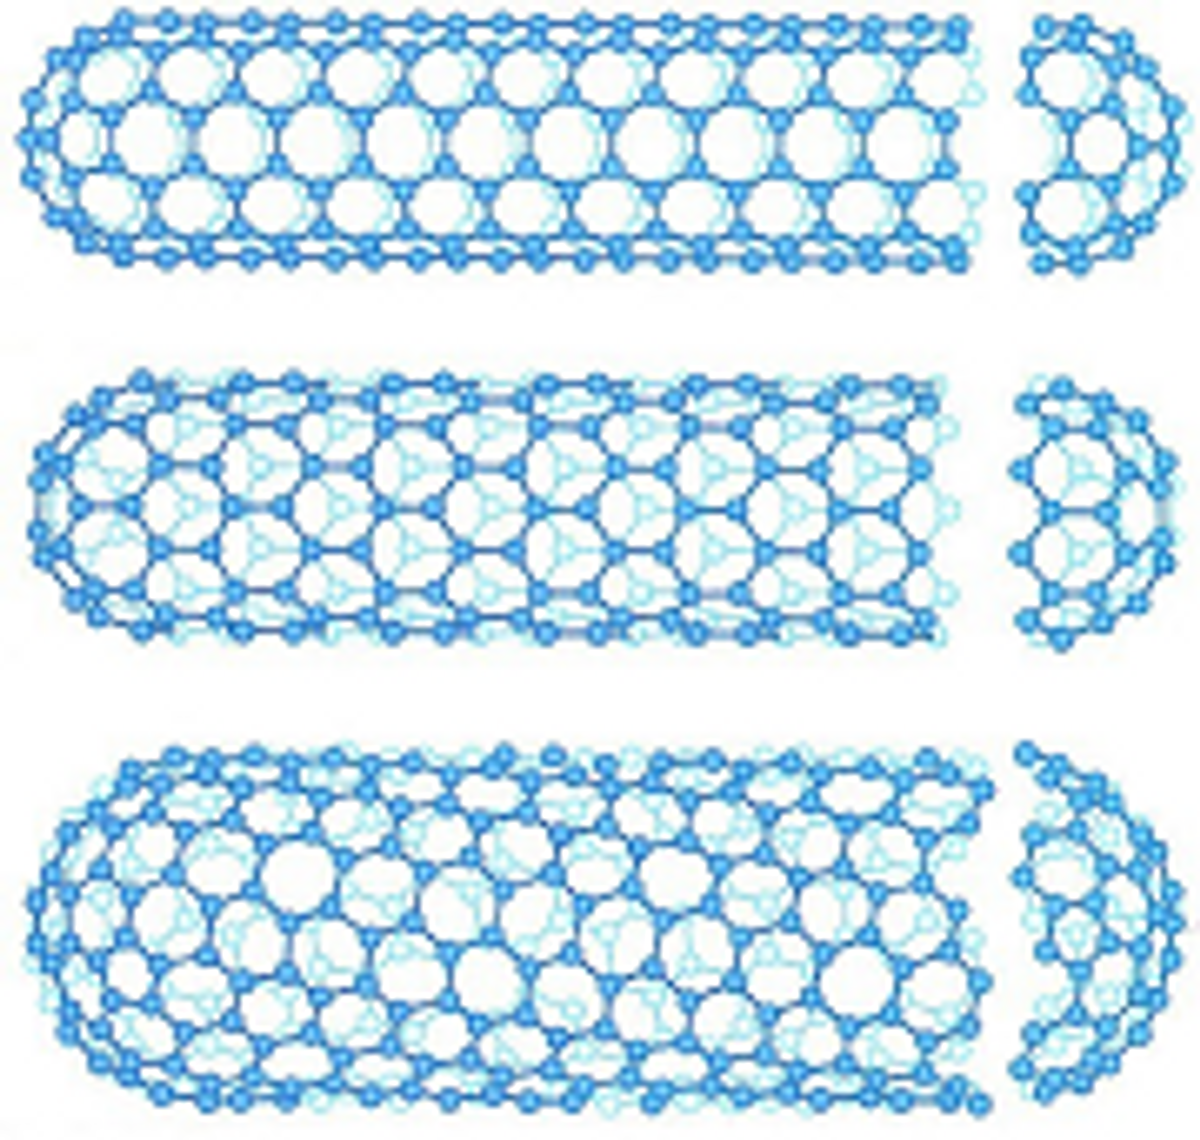 Carbon Nanotubes Have Strange New "Remote Heating" Property